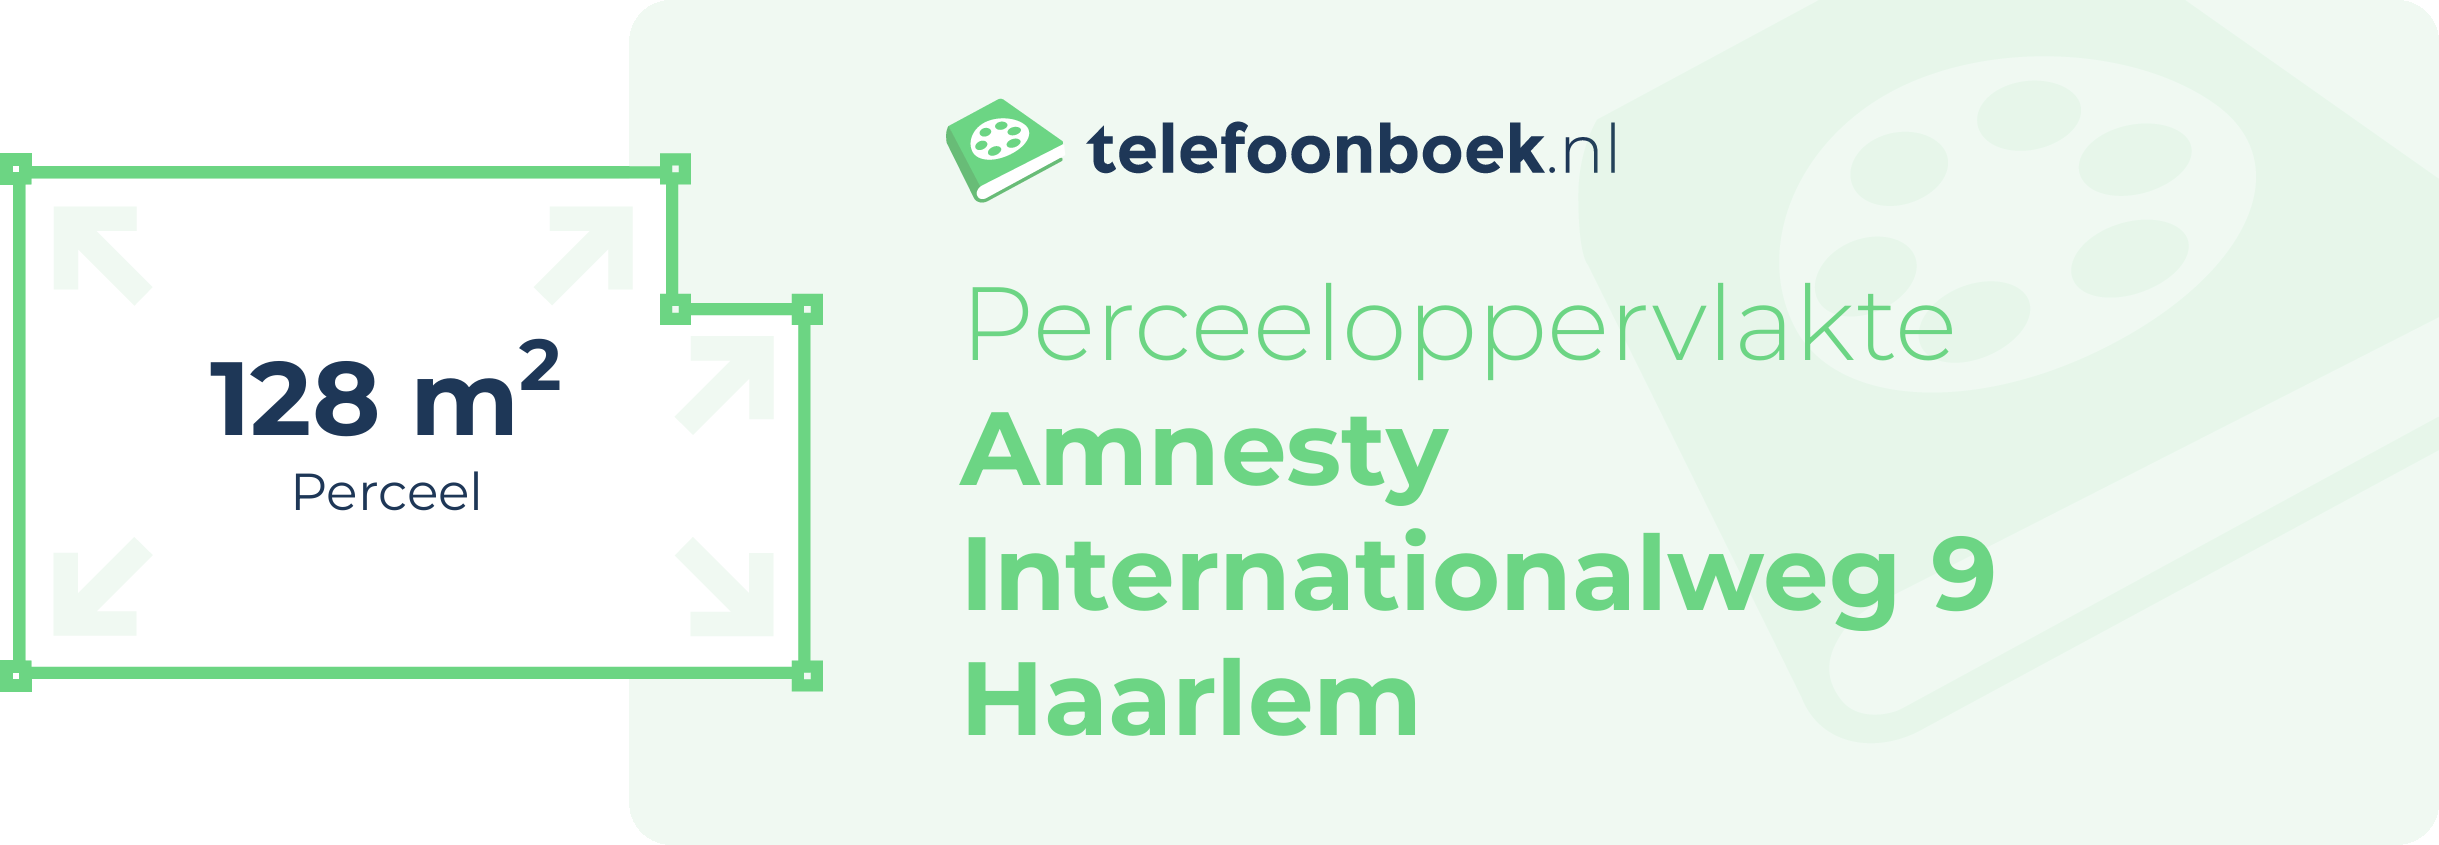 Perceeloppervlakte Amnesty Internationalweg 9 Haarlem